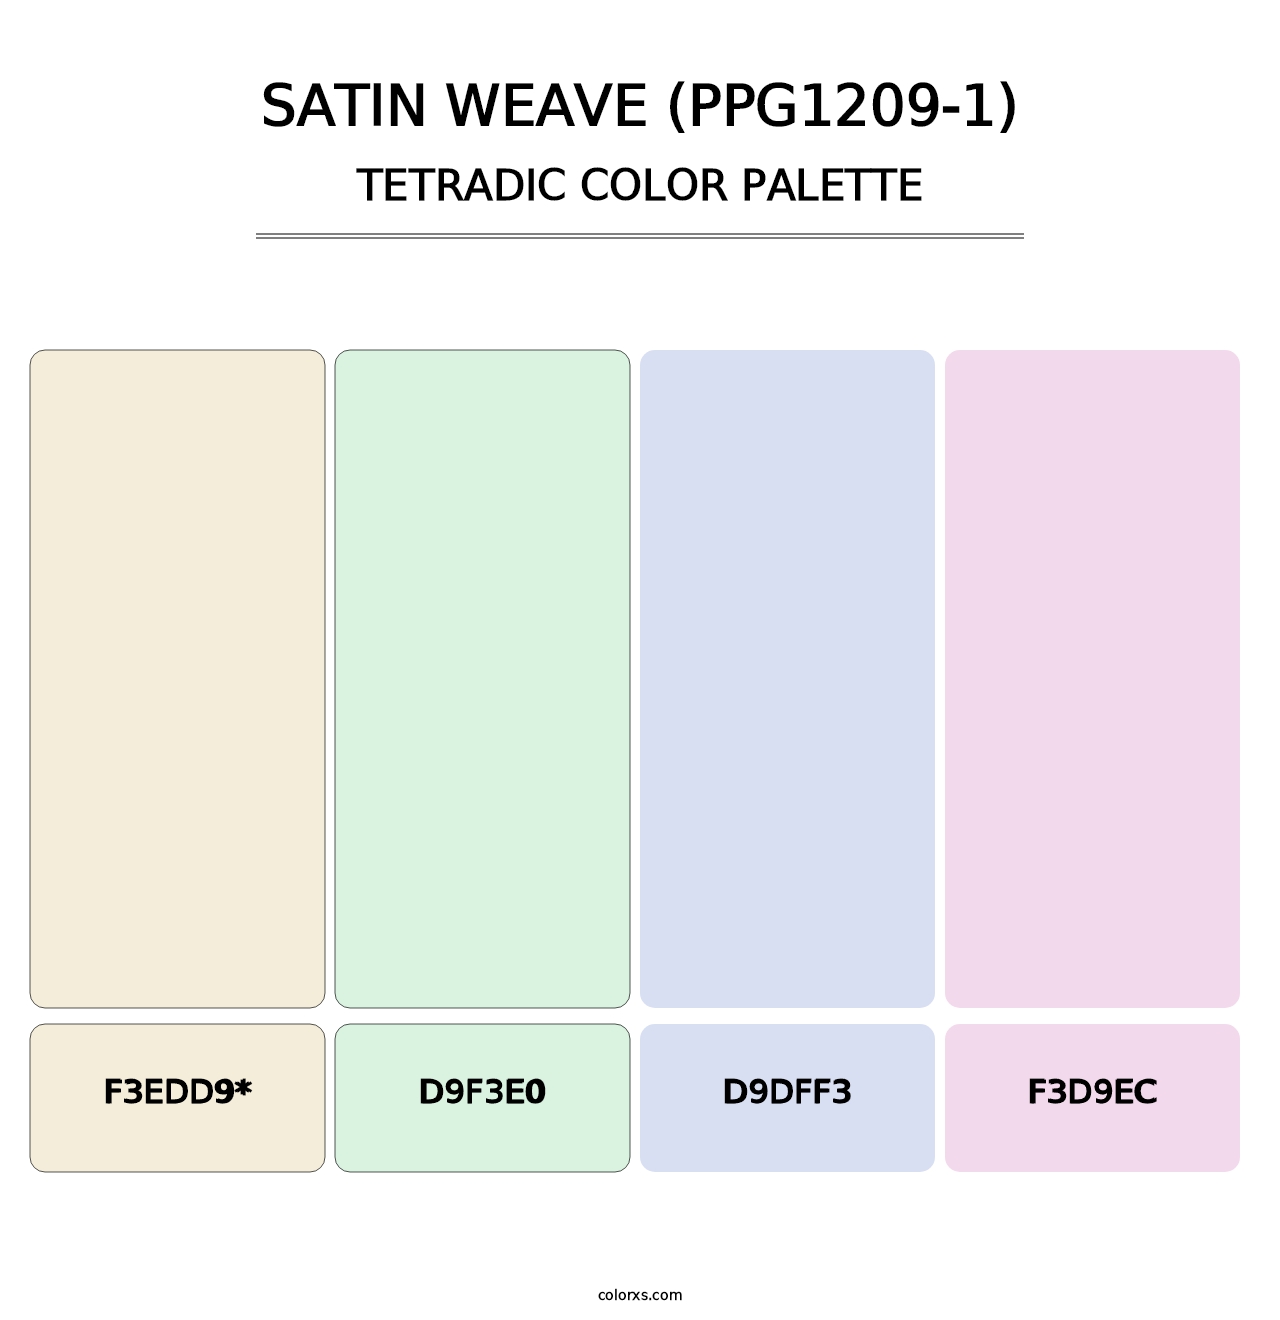 Satin Weave (PPG1209-1) - Tetradic Color Palette